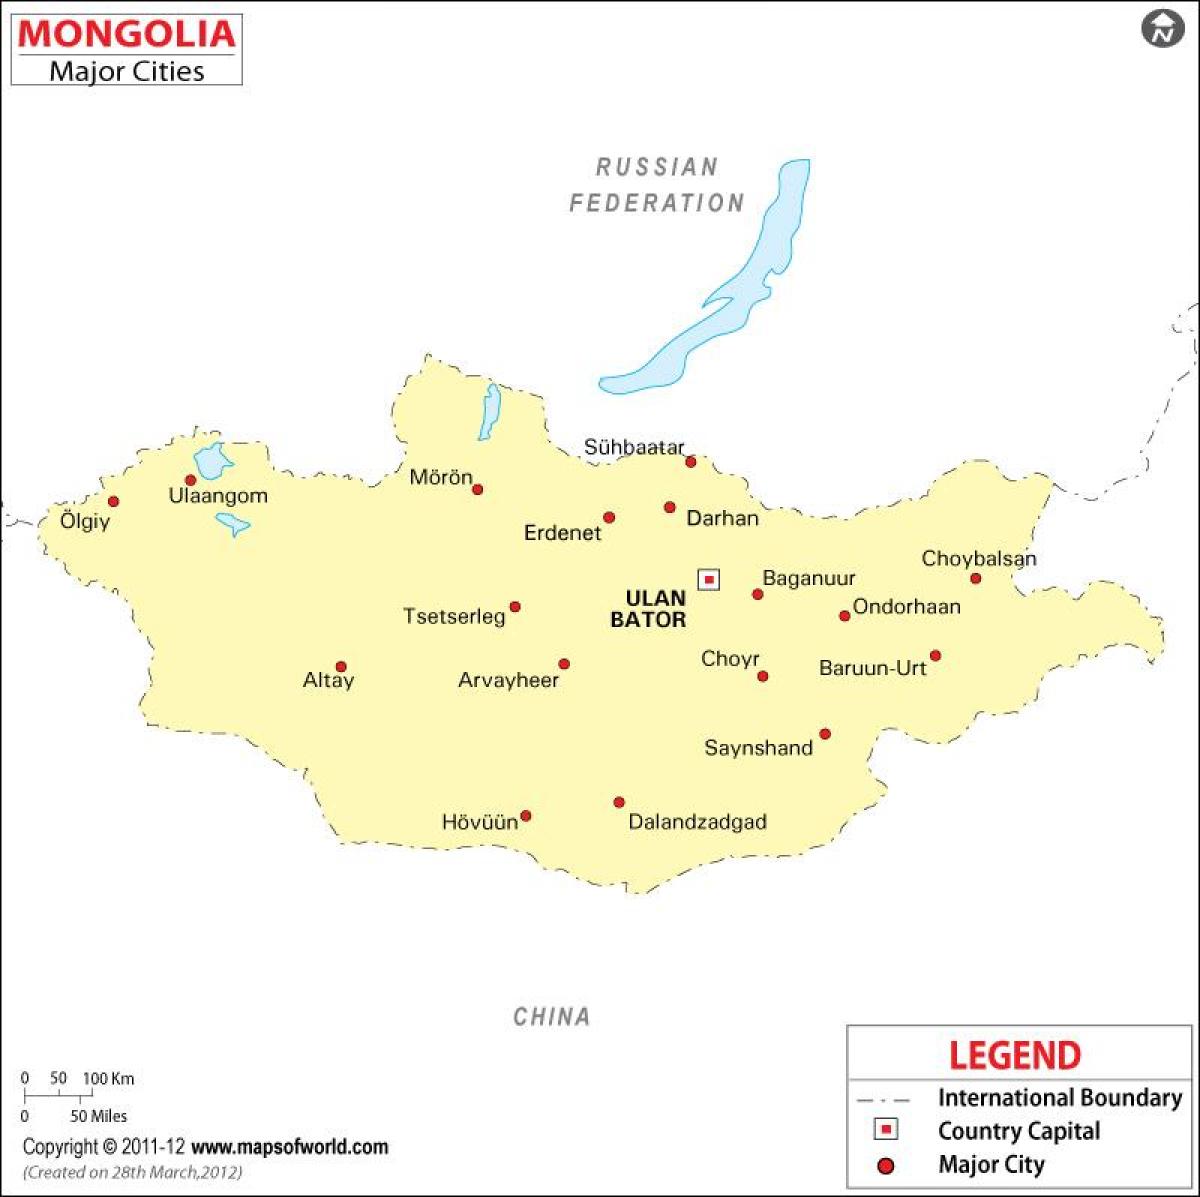 Mongolian kartta, jossa kaupungit